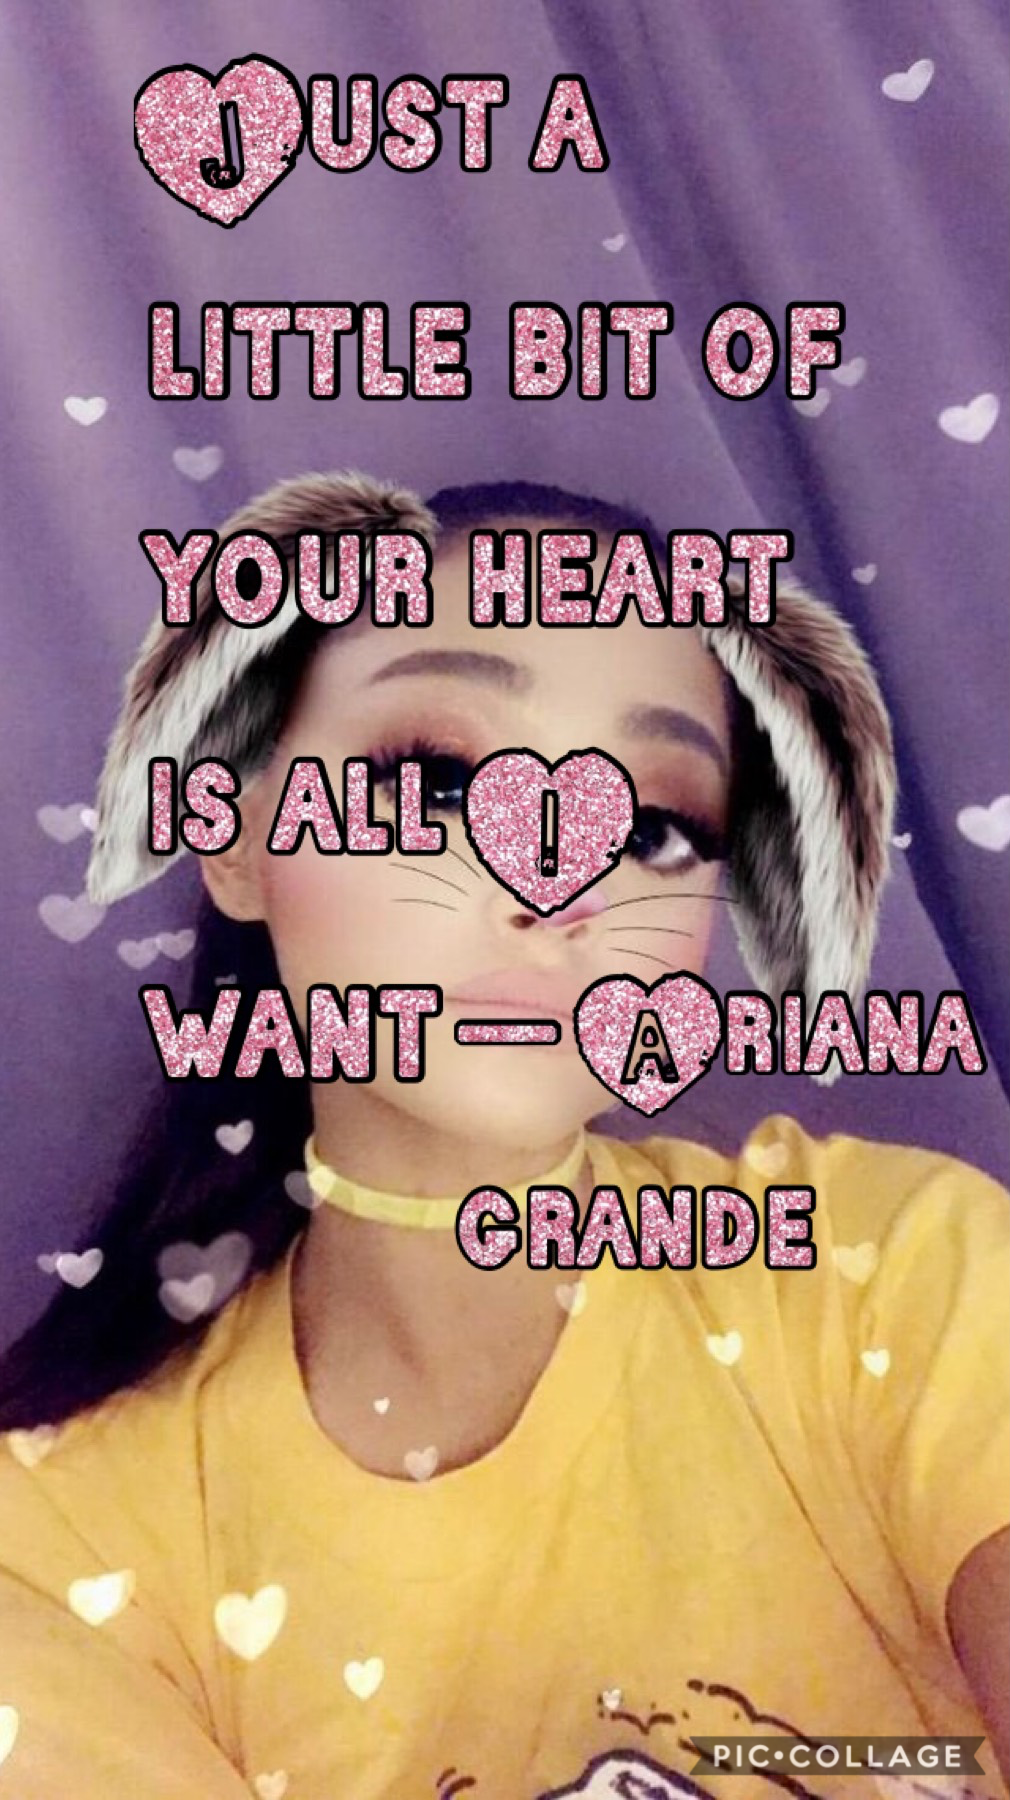 Do you like Ariana grande xx